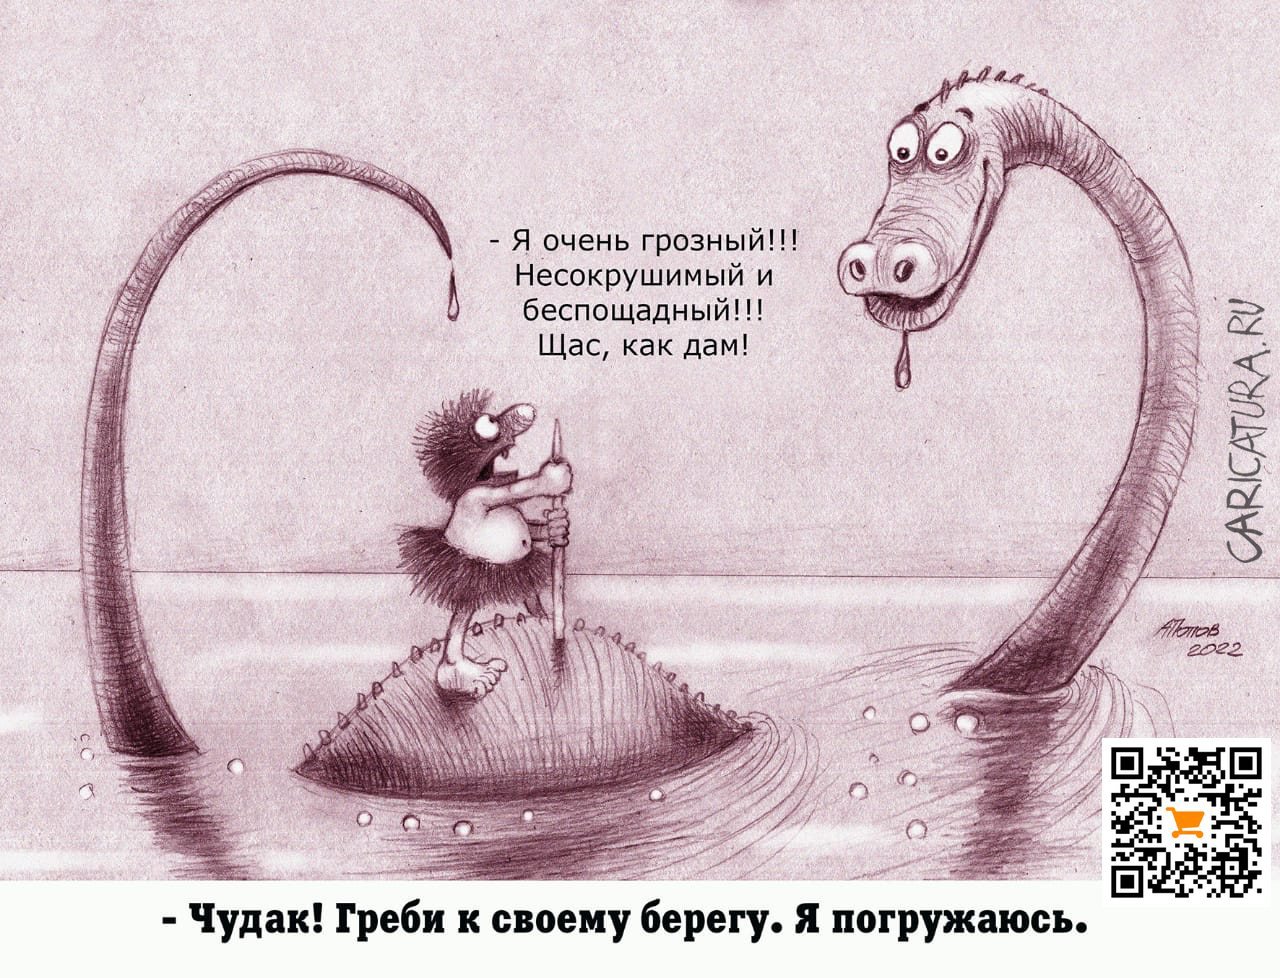 Карикатура "Очень грозный", Александр Попов